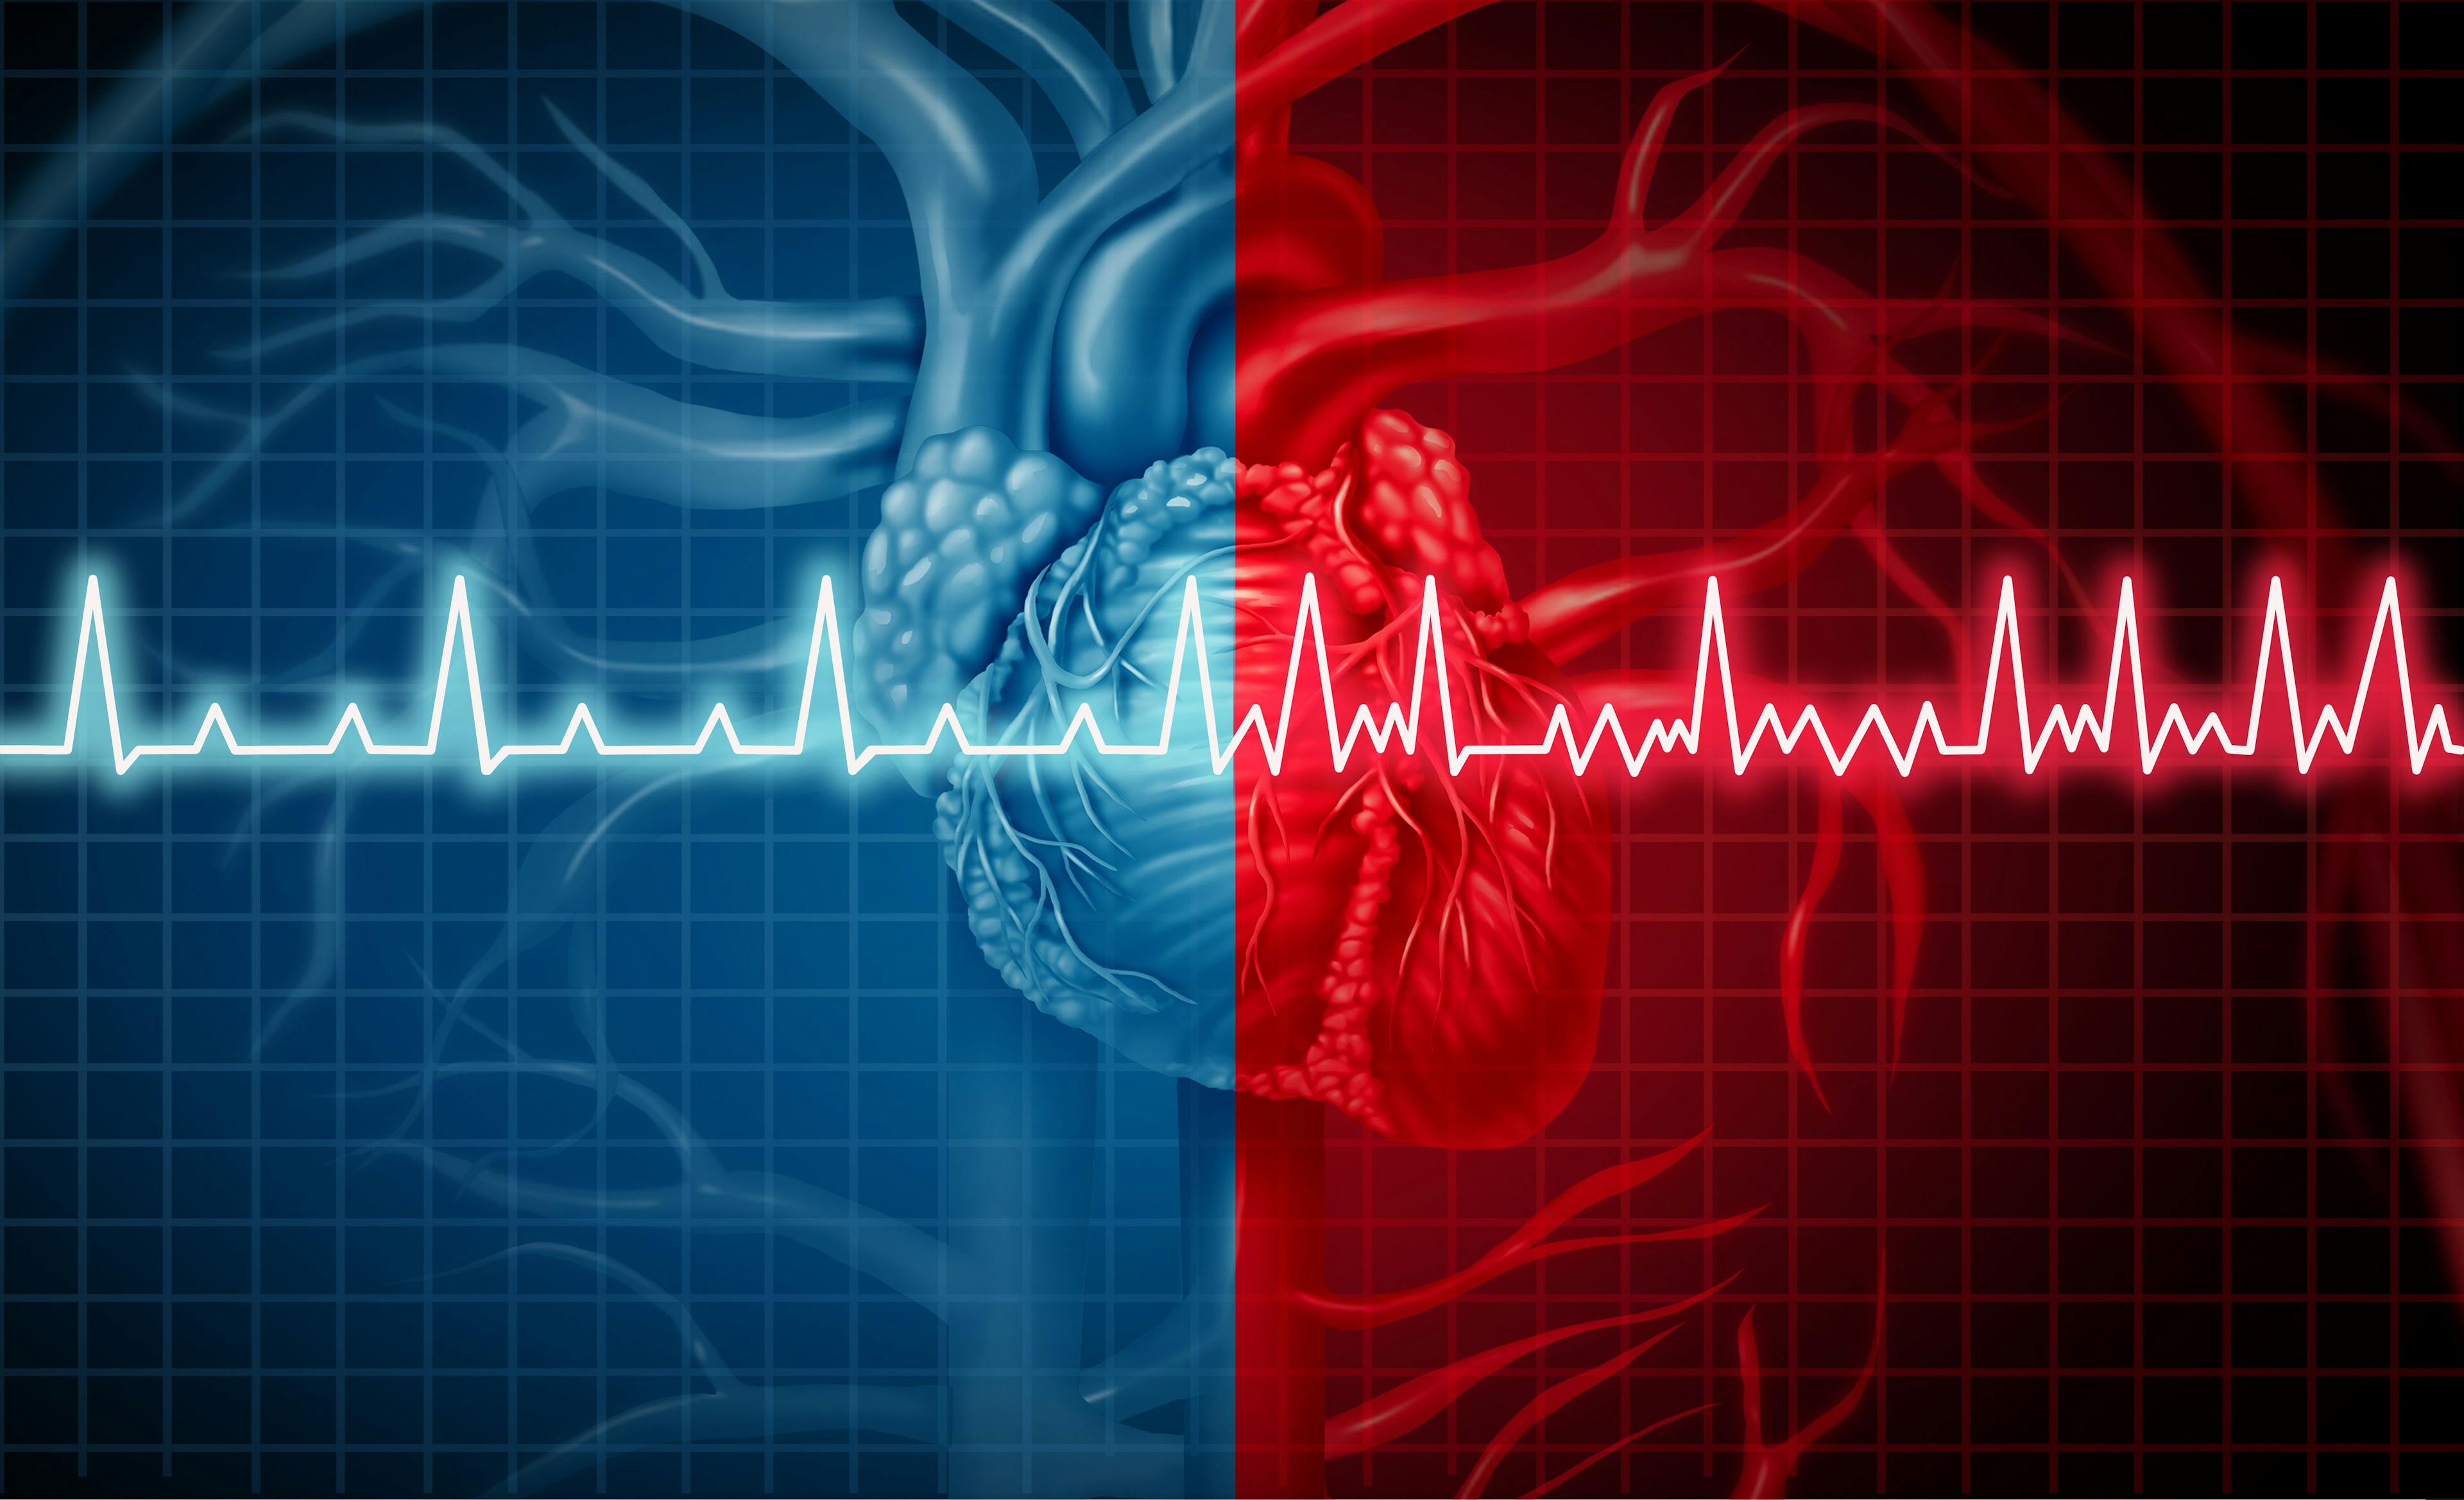 Atrial fibrillation is the most common type of irregular heartbeat. | image credit: freshidea - stock.adobe.com